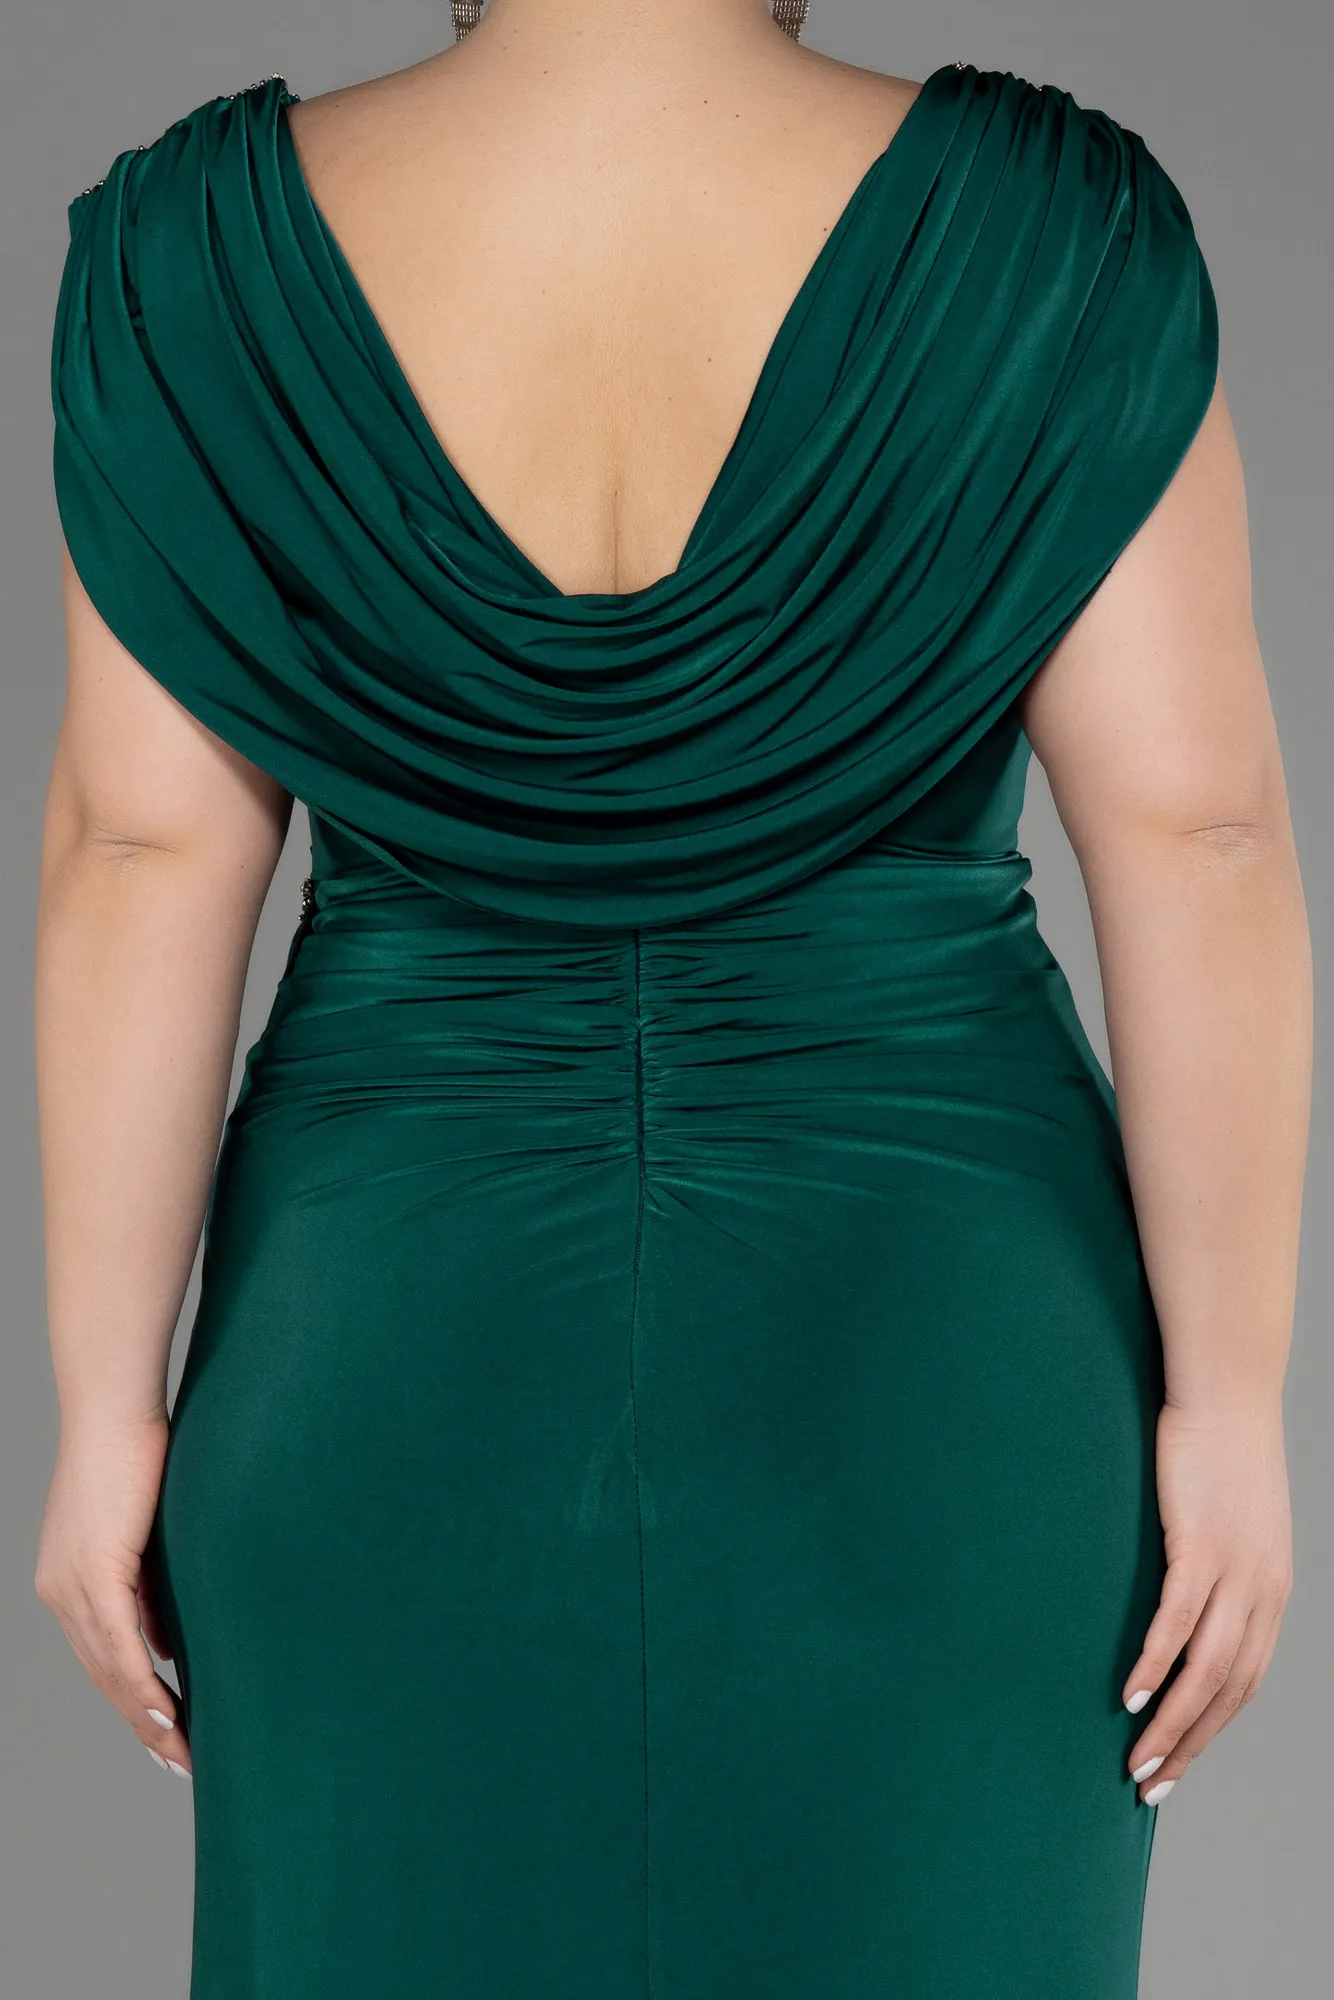 Emerald Green-Long Plus Size Engagement Dress ABU3734